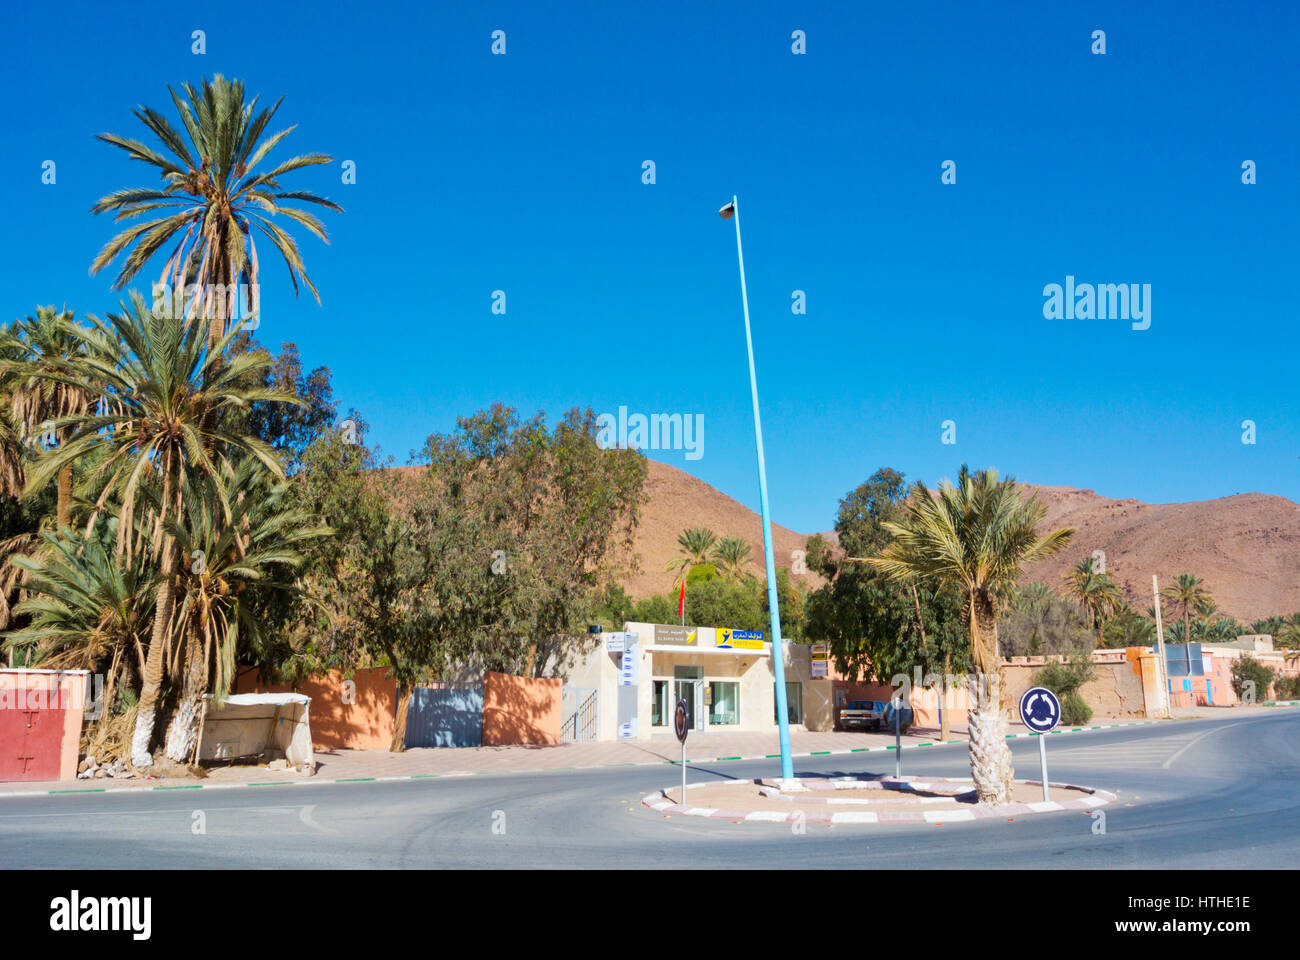 Route 102, vor Postamt, Taghjijt, Guelmim-Oued Region, Marokko  Stockfotografie - Alamy